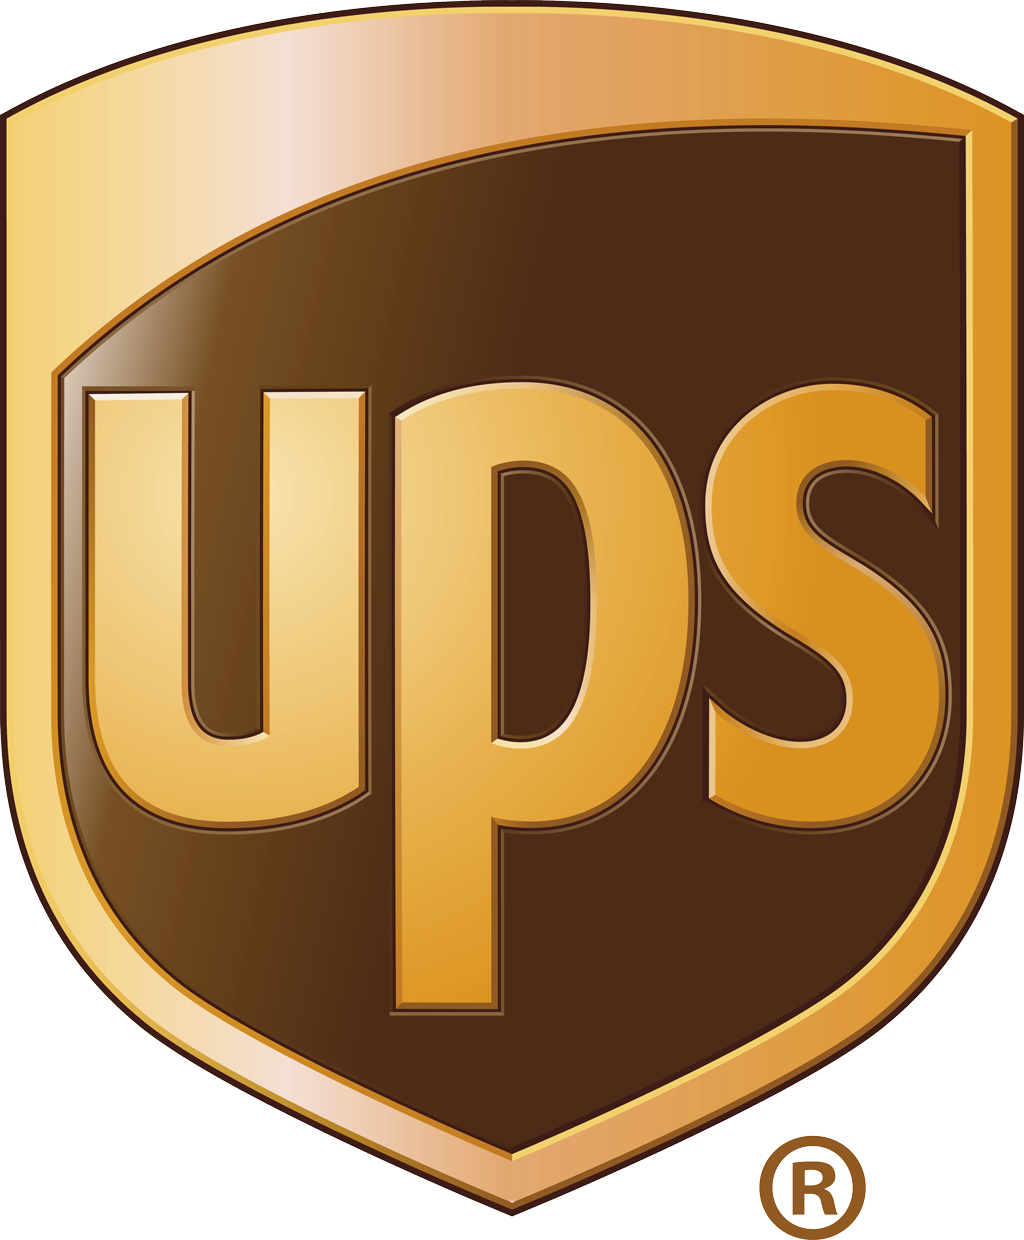 UPS United Parcel Service - logotype, transparent .png, medium, large